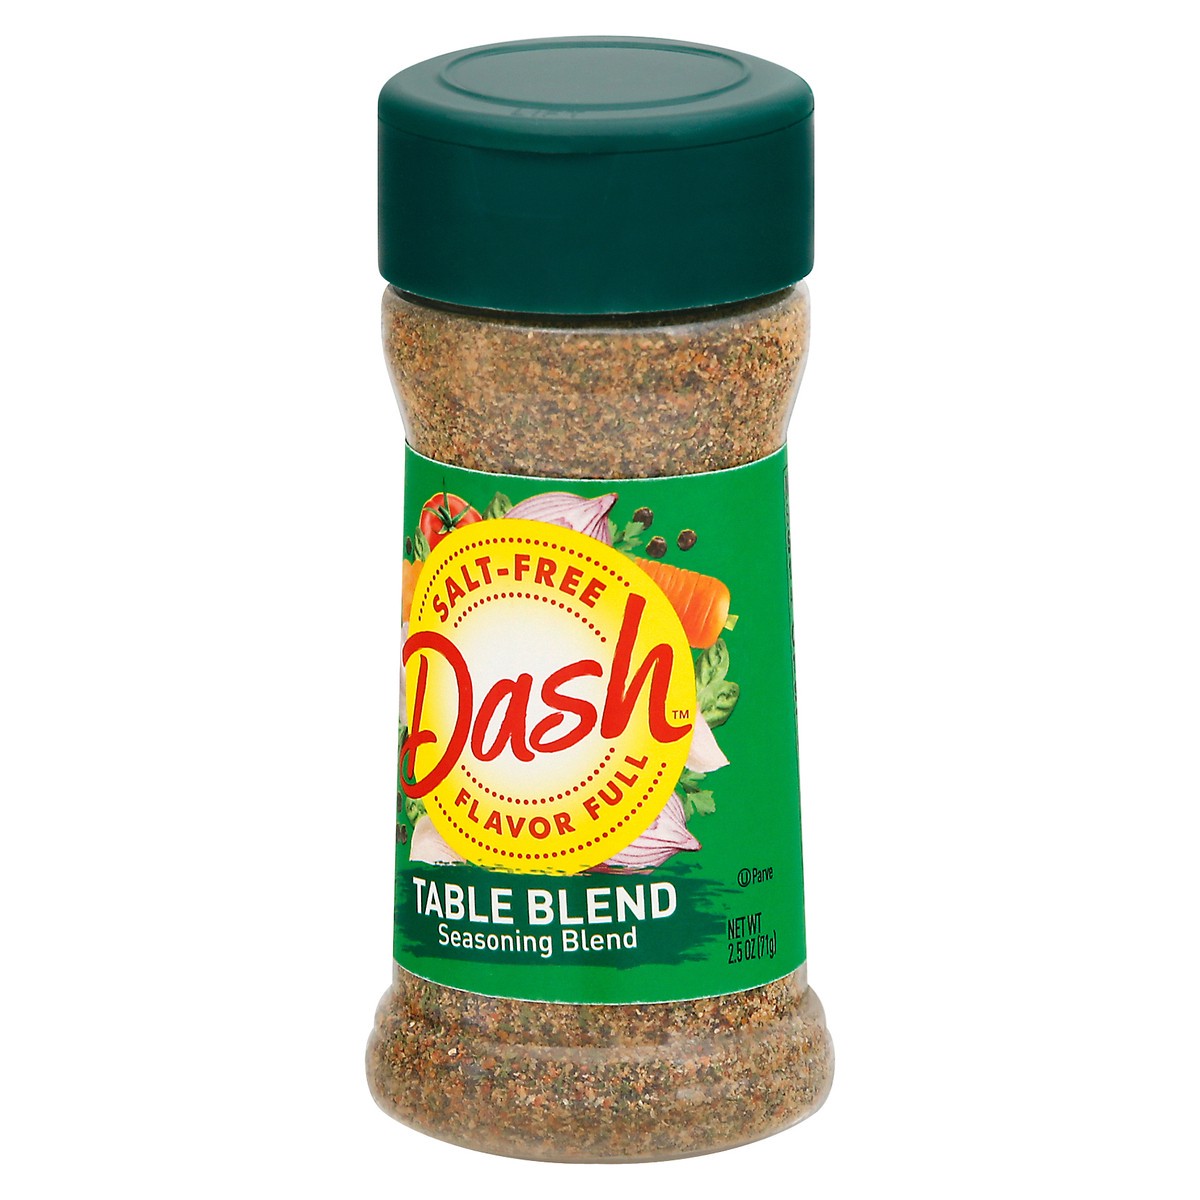 Mrs. Dash Everything But The Salt Seasoning - Shop Spice Mixes at H-E-B